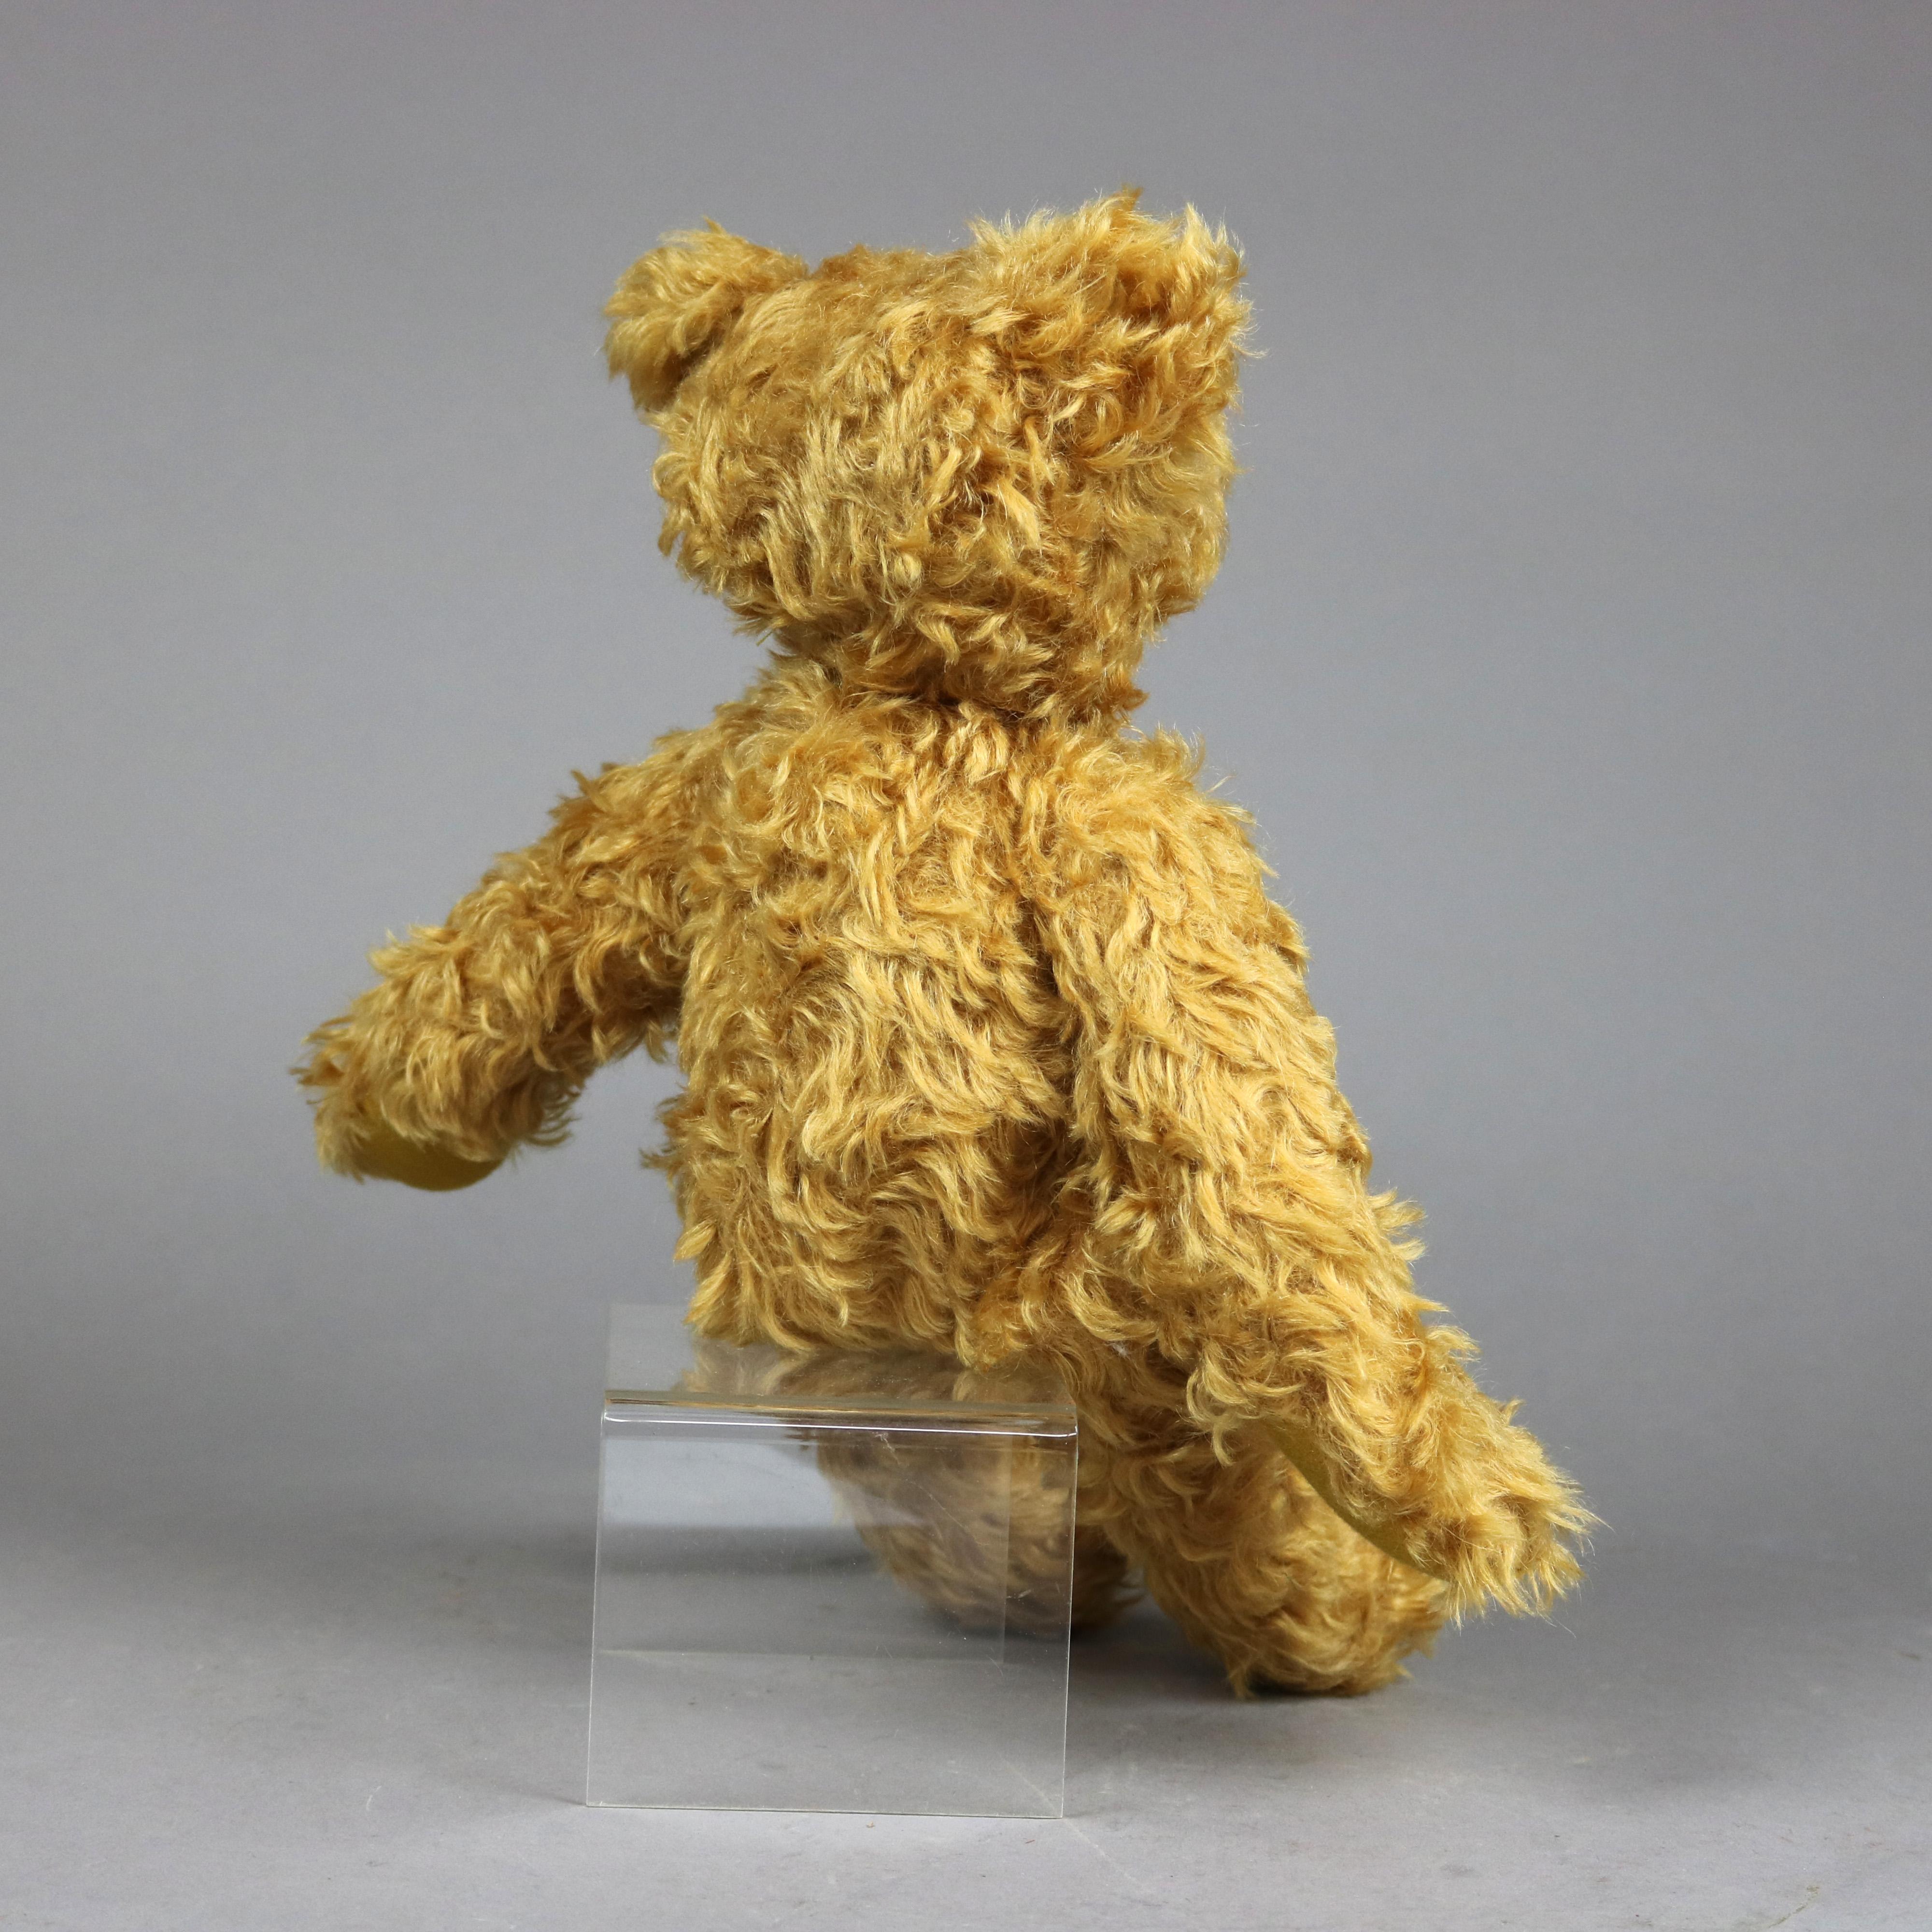 Fabric Antique Steiff School Golden Standard Size Jointed Teddy Bear circa 1940